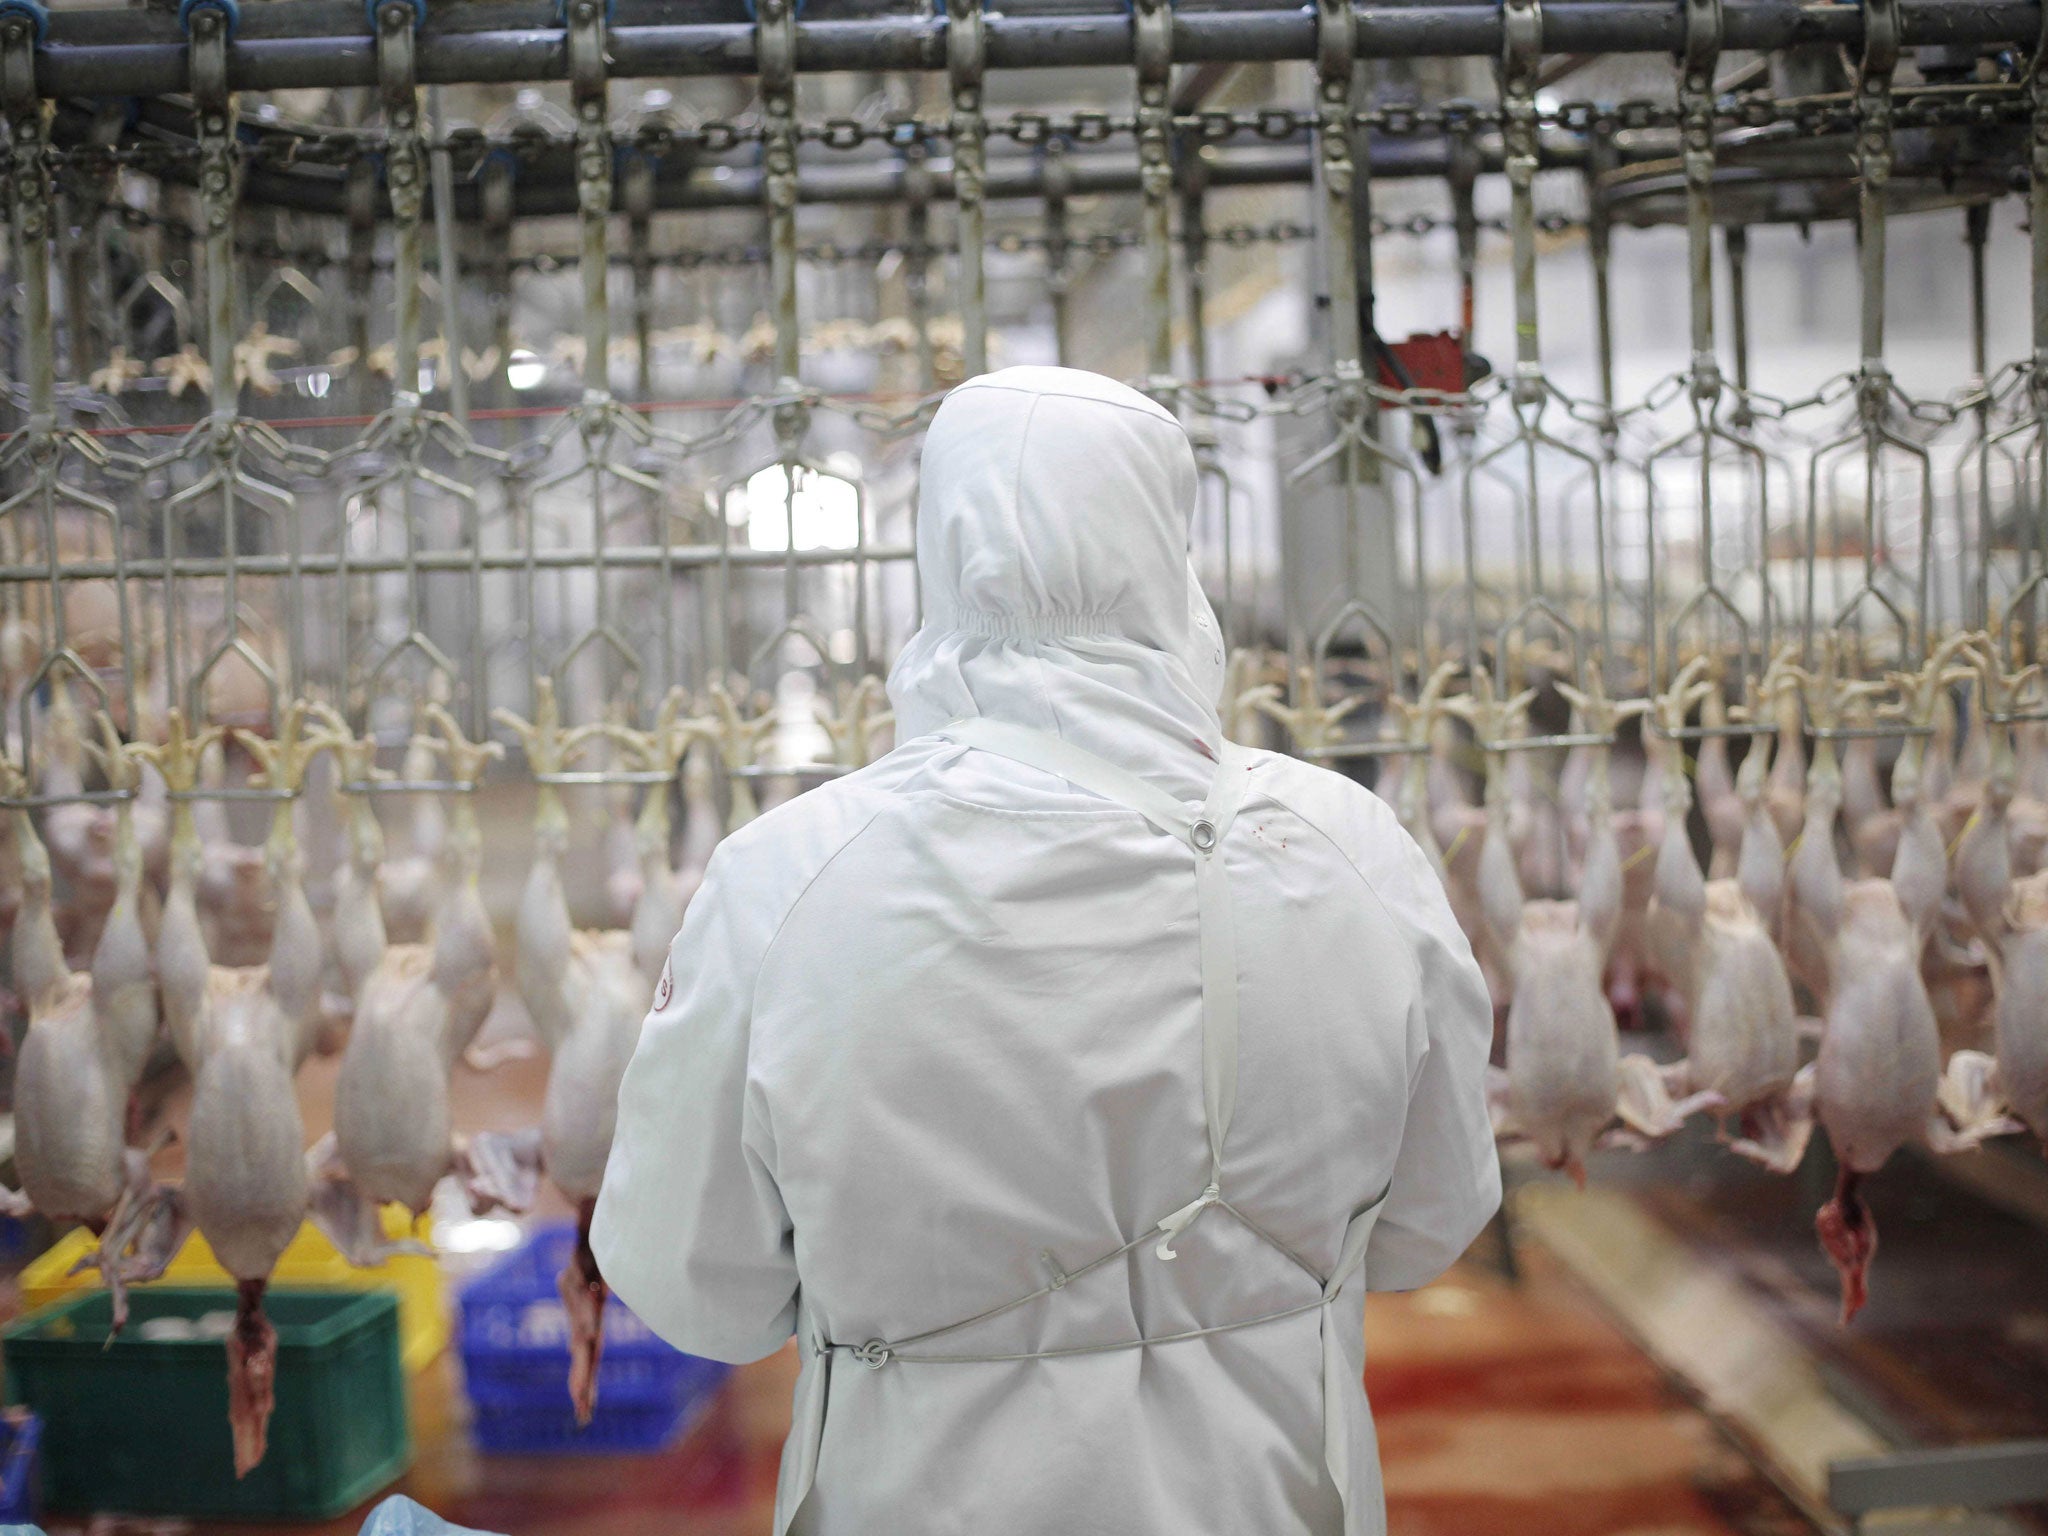 chickens at a halal abattoir